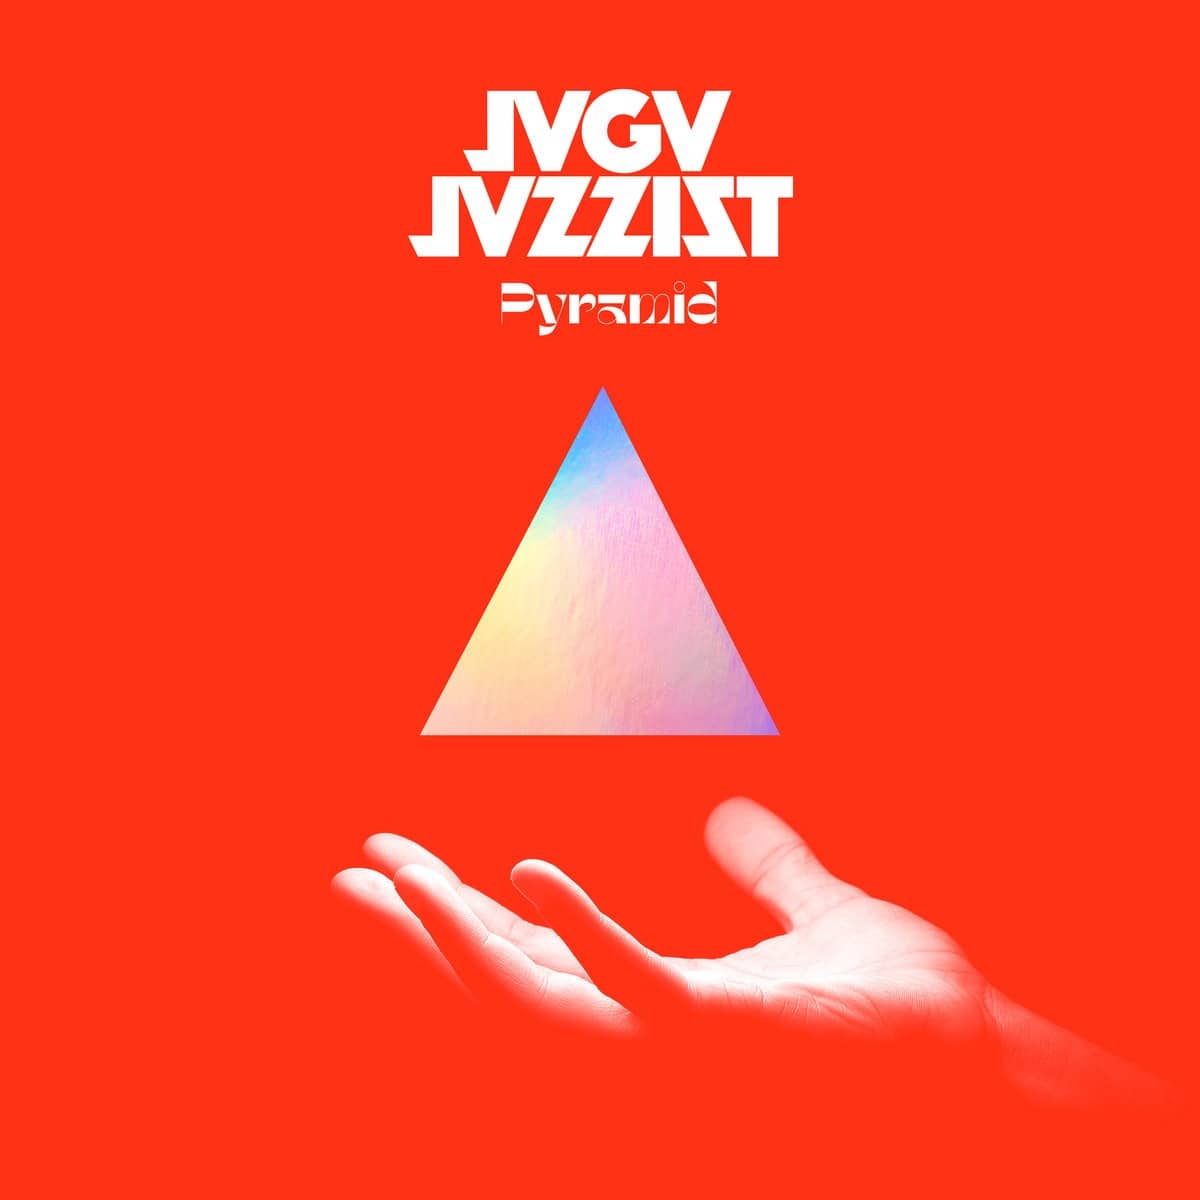 Jaga Jazzist - Pyramid - BF099 - NINJA TUNE